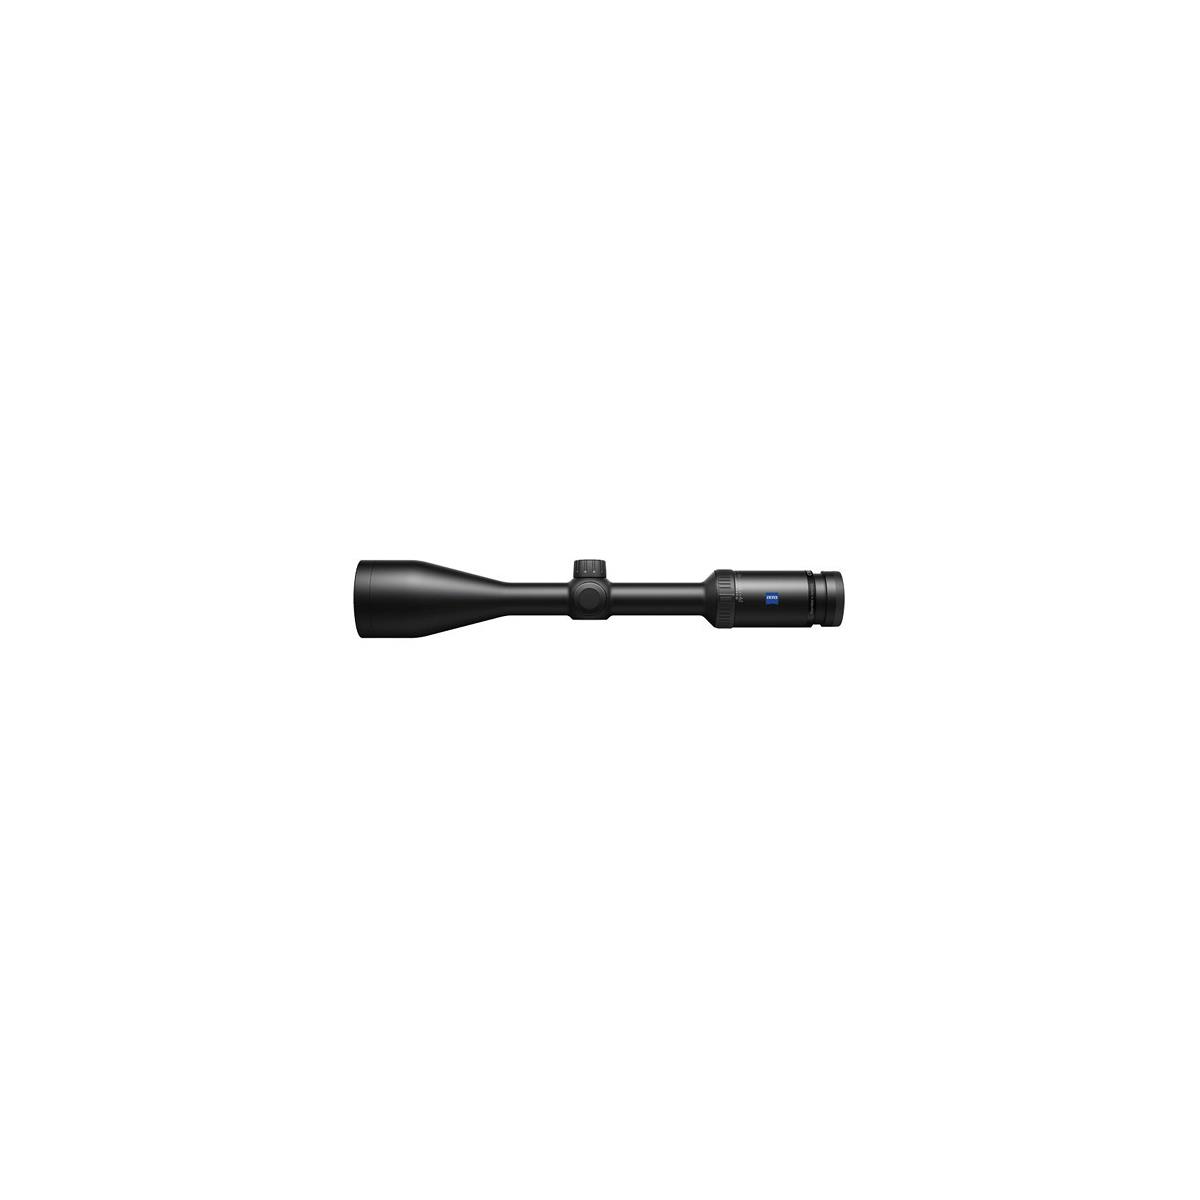 Zeiss 3-15x50 Conquest HD5 Riflescope, Plex 20 Reticle, Side Focus, 1" Tube -  522631-9981-000